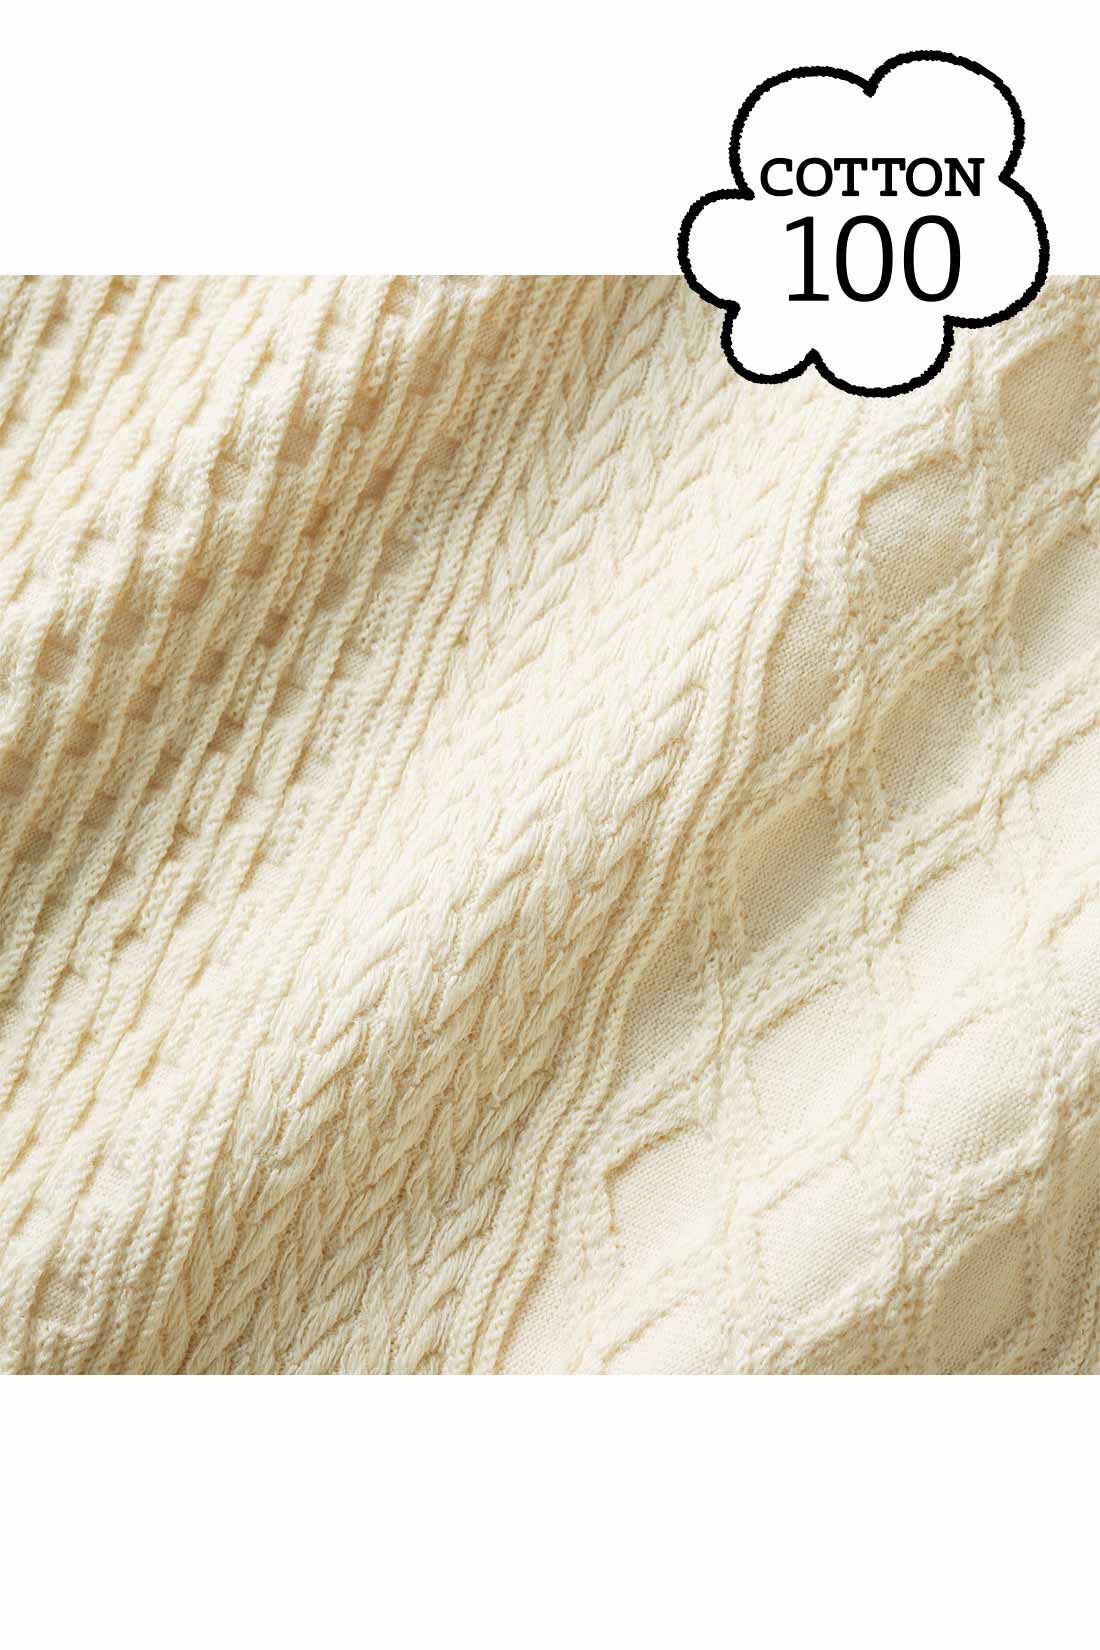 Live in  comfort|Live love cottonプロジェクト　リブ イン コンフォート　柄編みが素敵な厚手オーガニックコットントップス〈アイボリー〉|まるでニットのようなジャカード編みのカットソー素材。